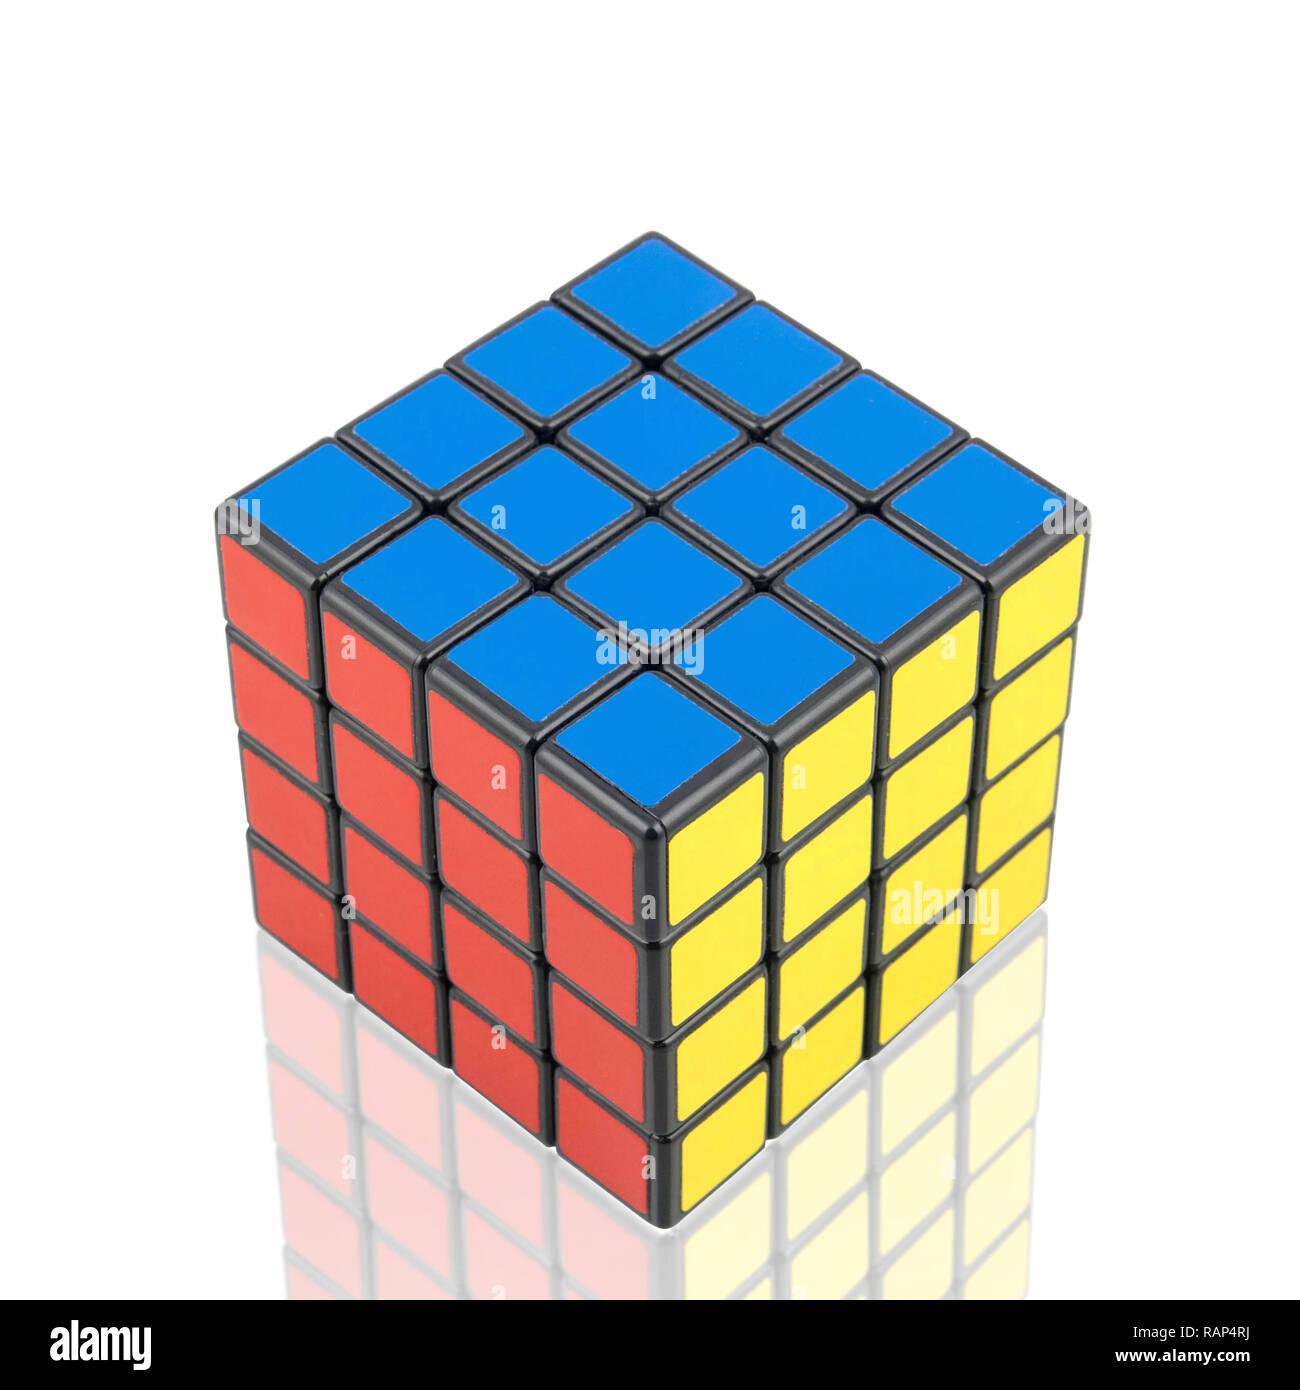 Rubik's Revenge (4x4x4) cube on the white background Stock Photo - Alamy